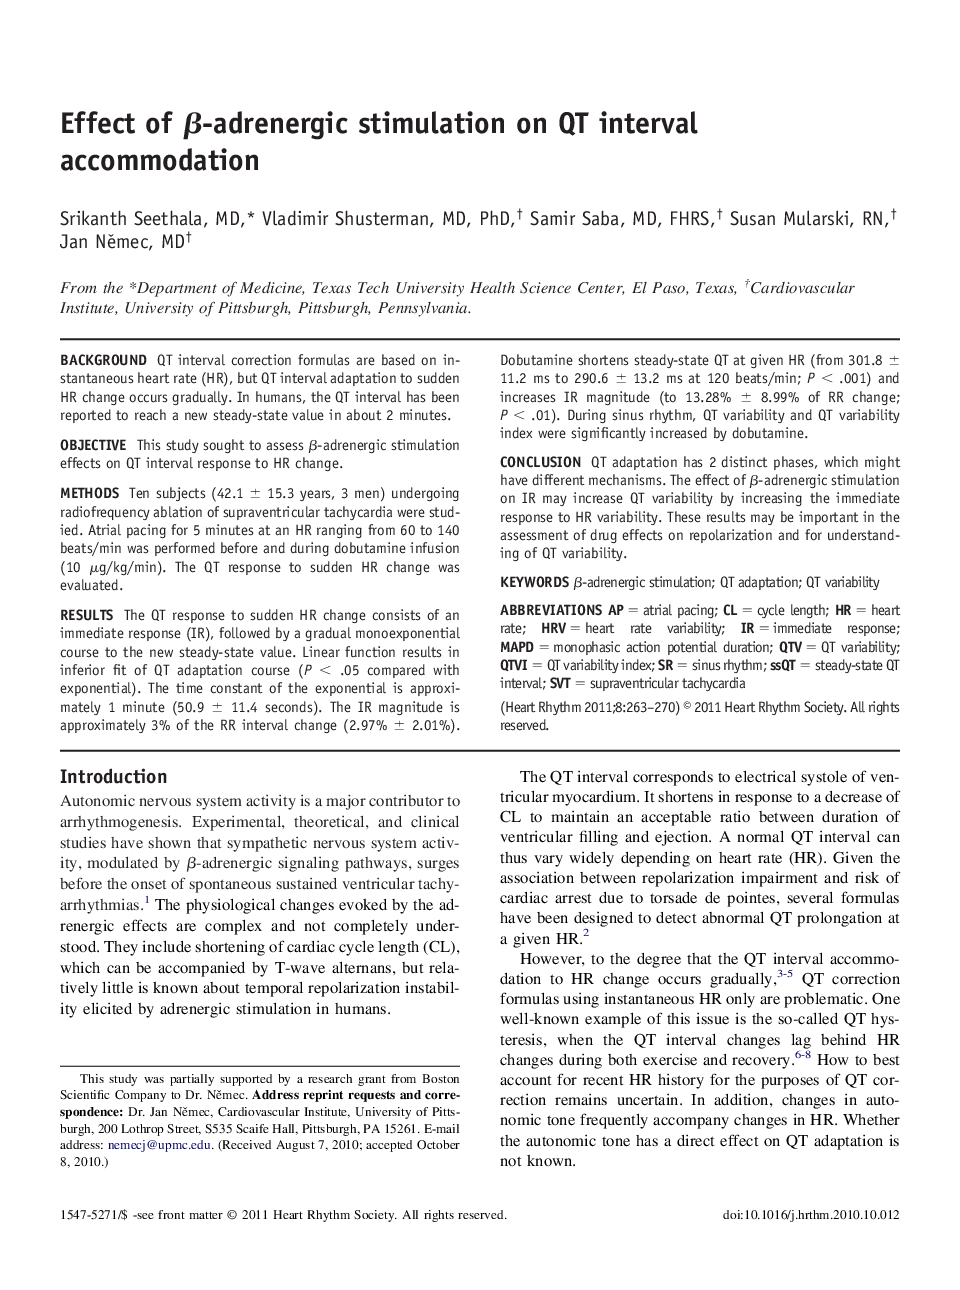 Effect of β-adrenergic stimulation on QT interval accommodation 